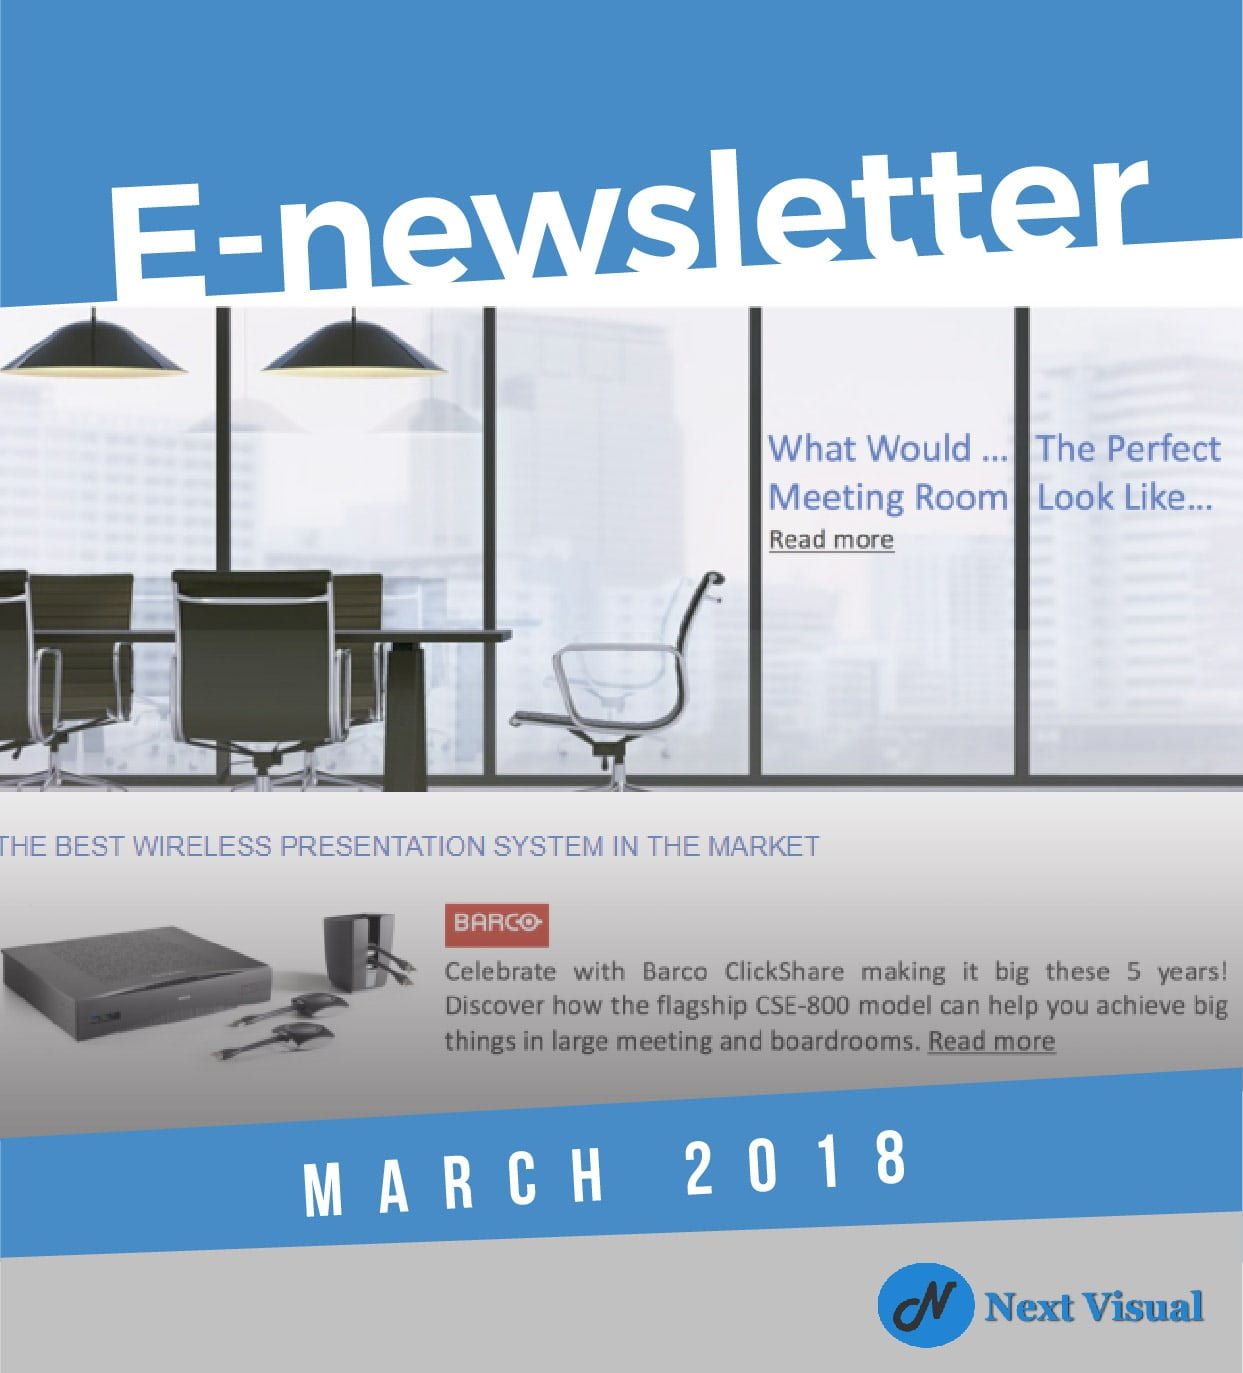 March 2018 newsletter